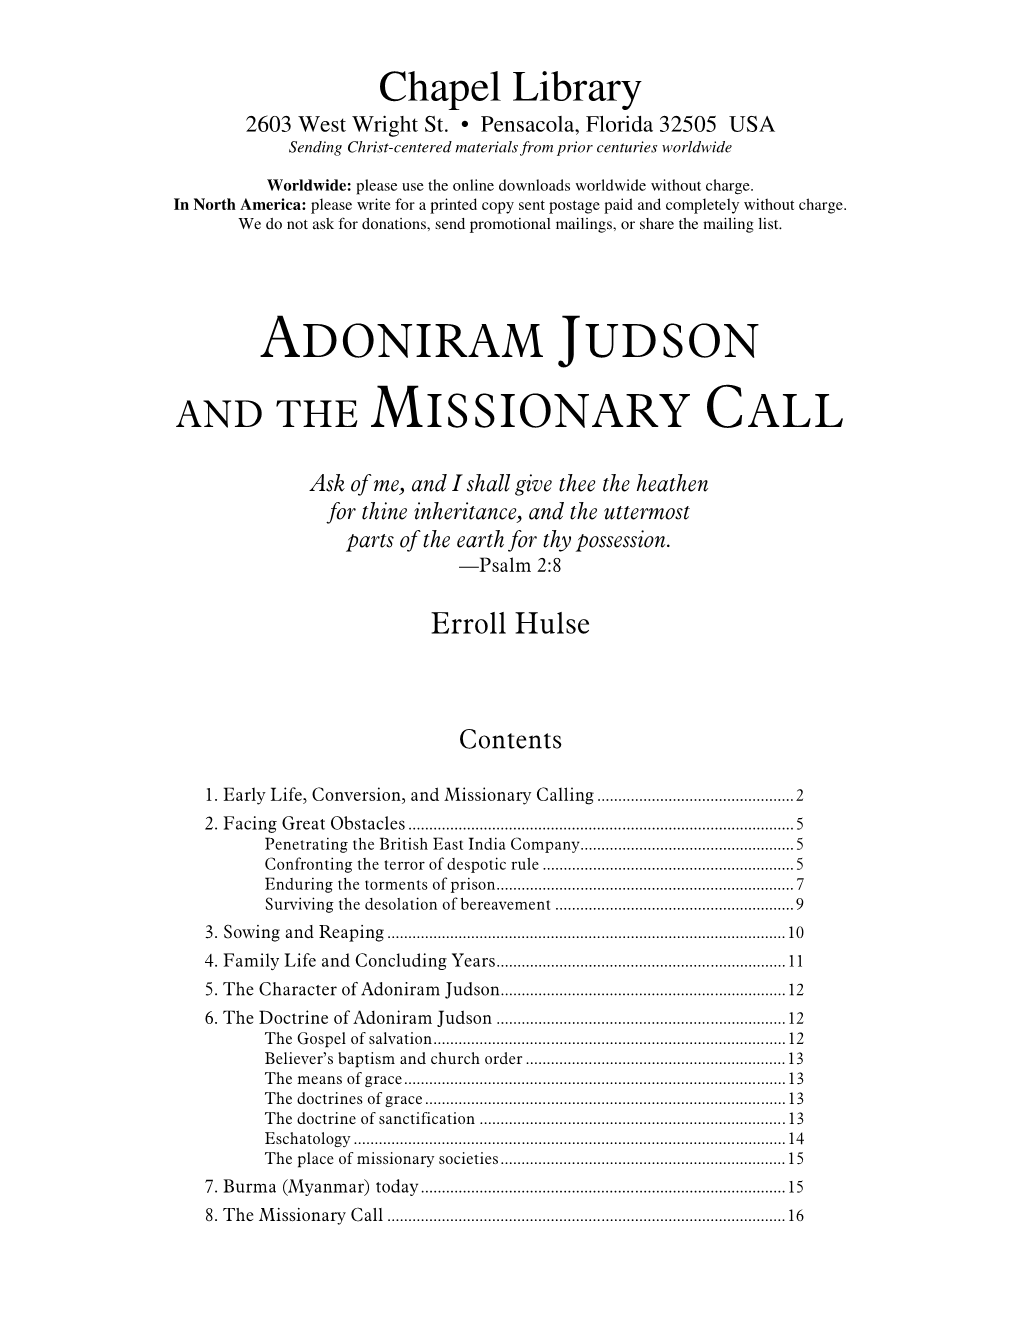 Adoniram Judson and the Missionary Call